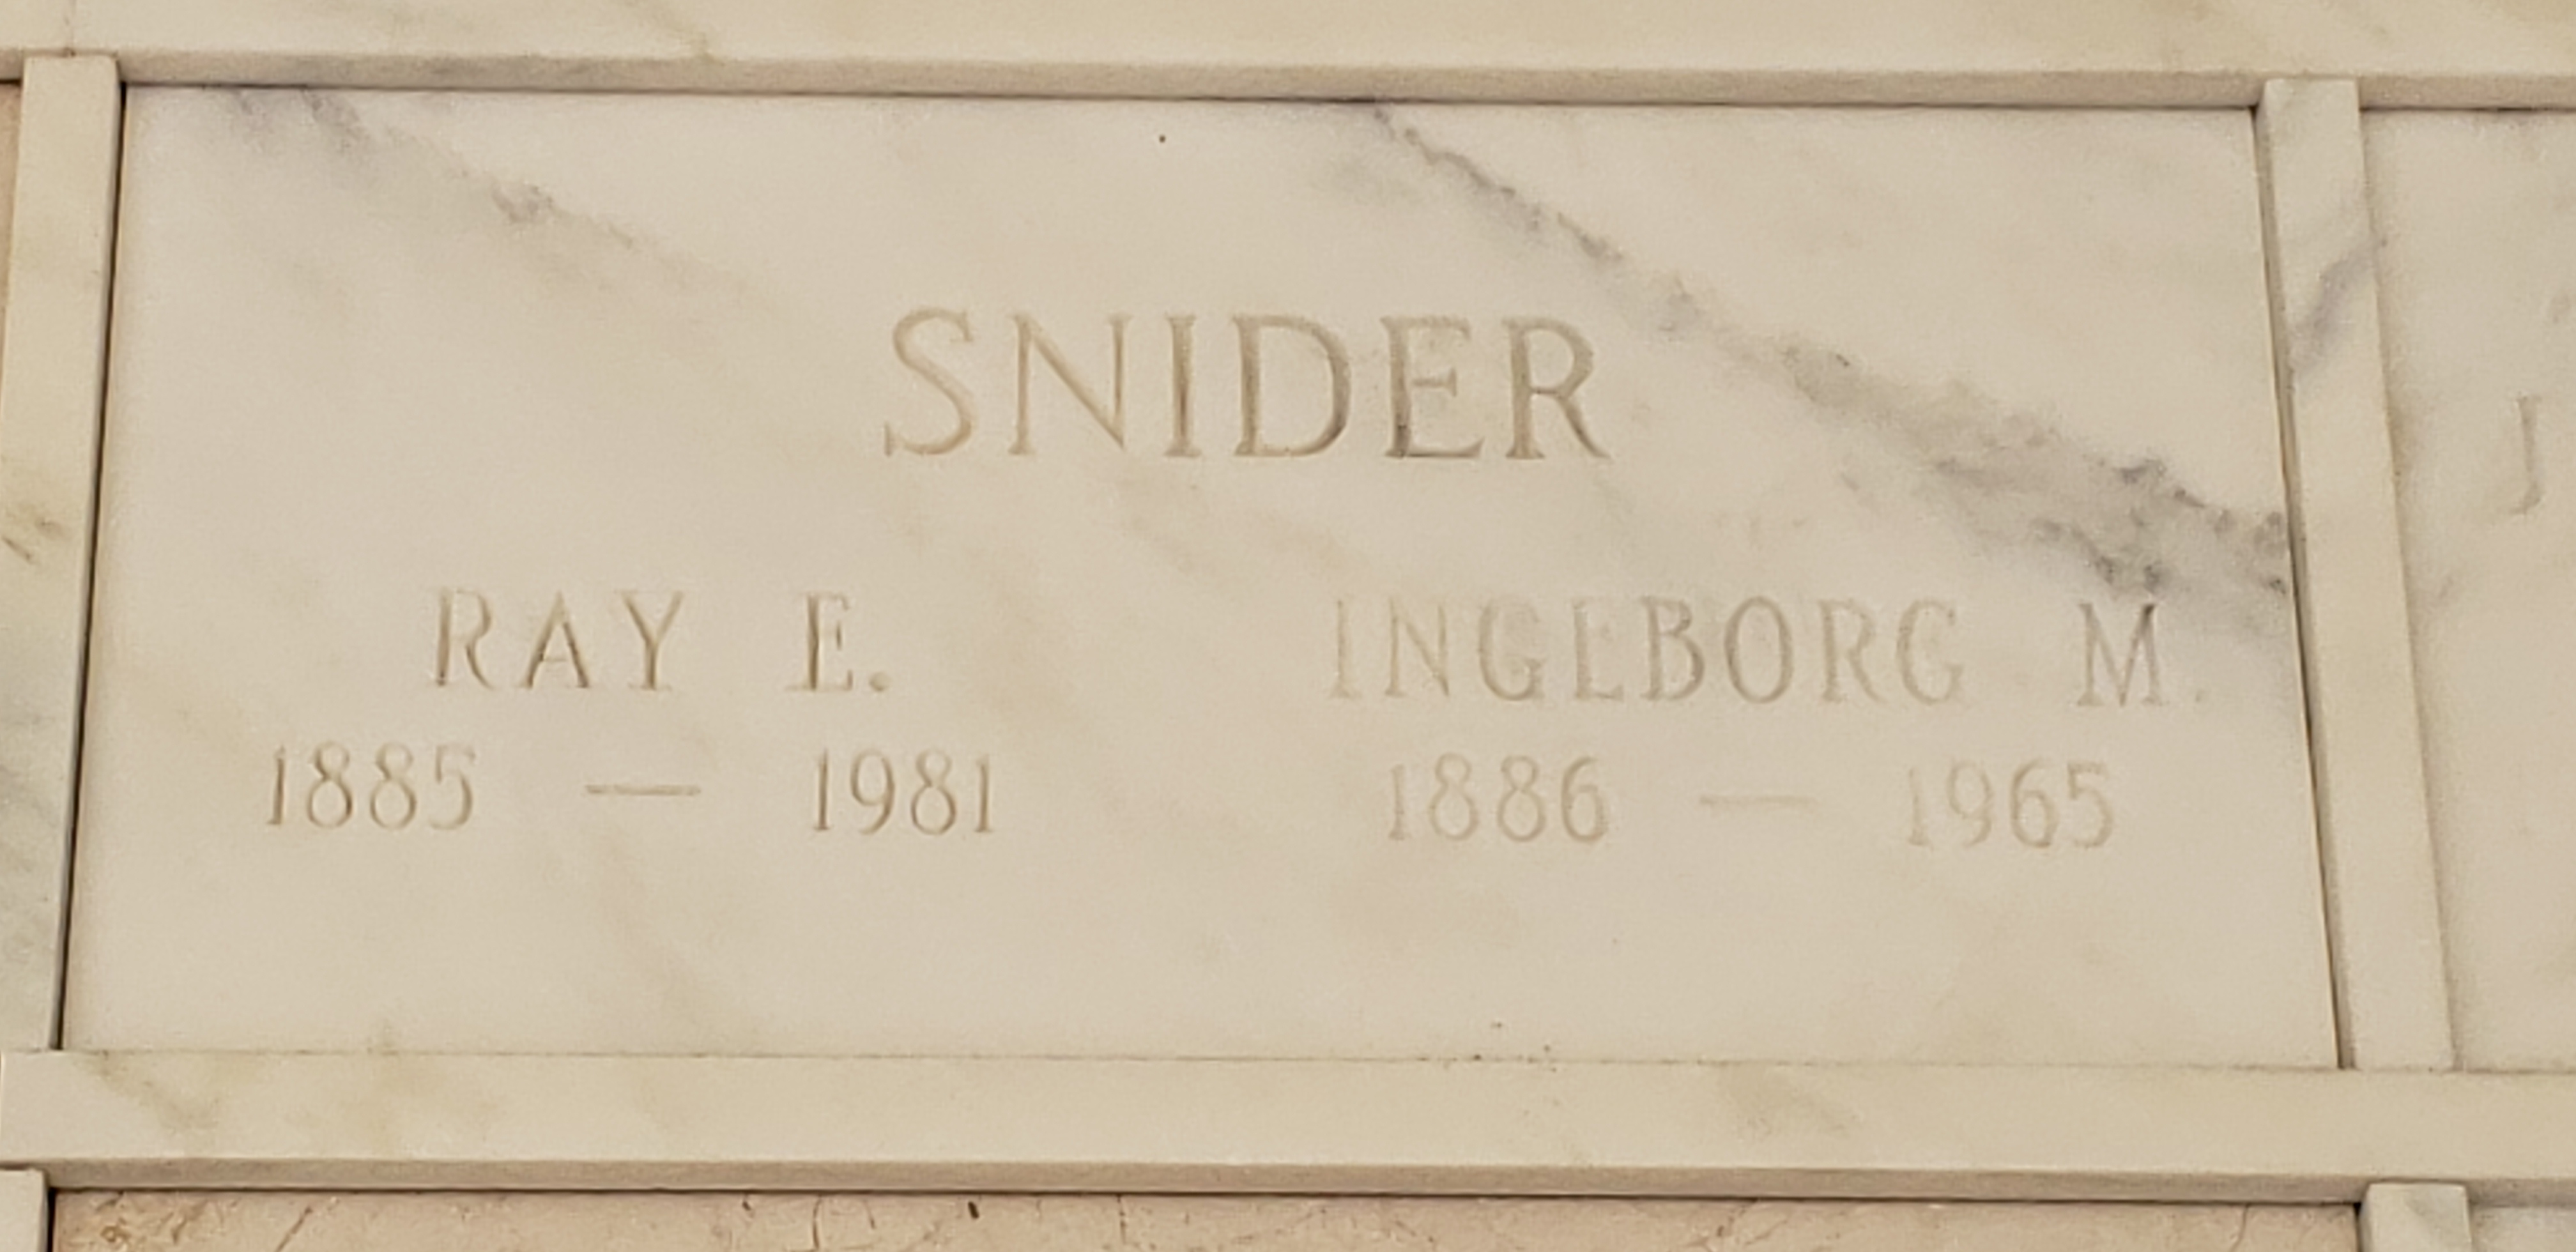 Ingeborg M Snider